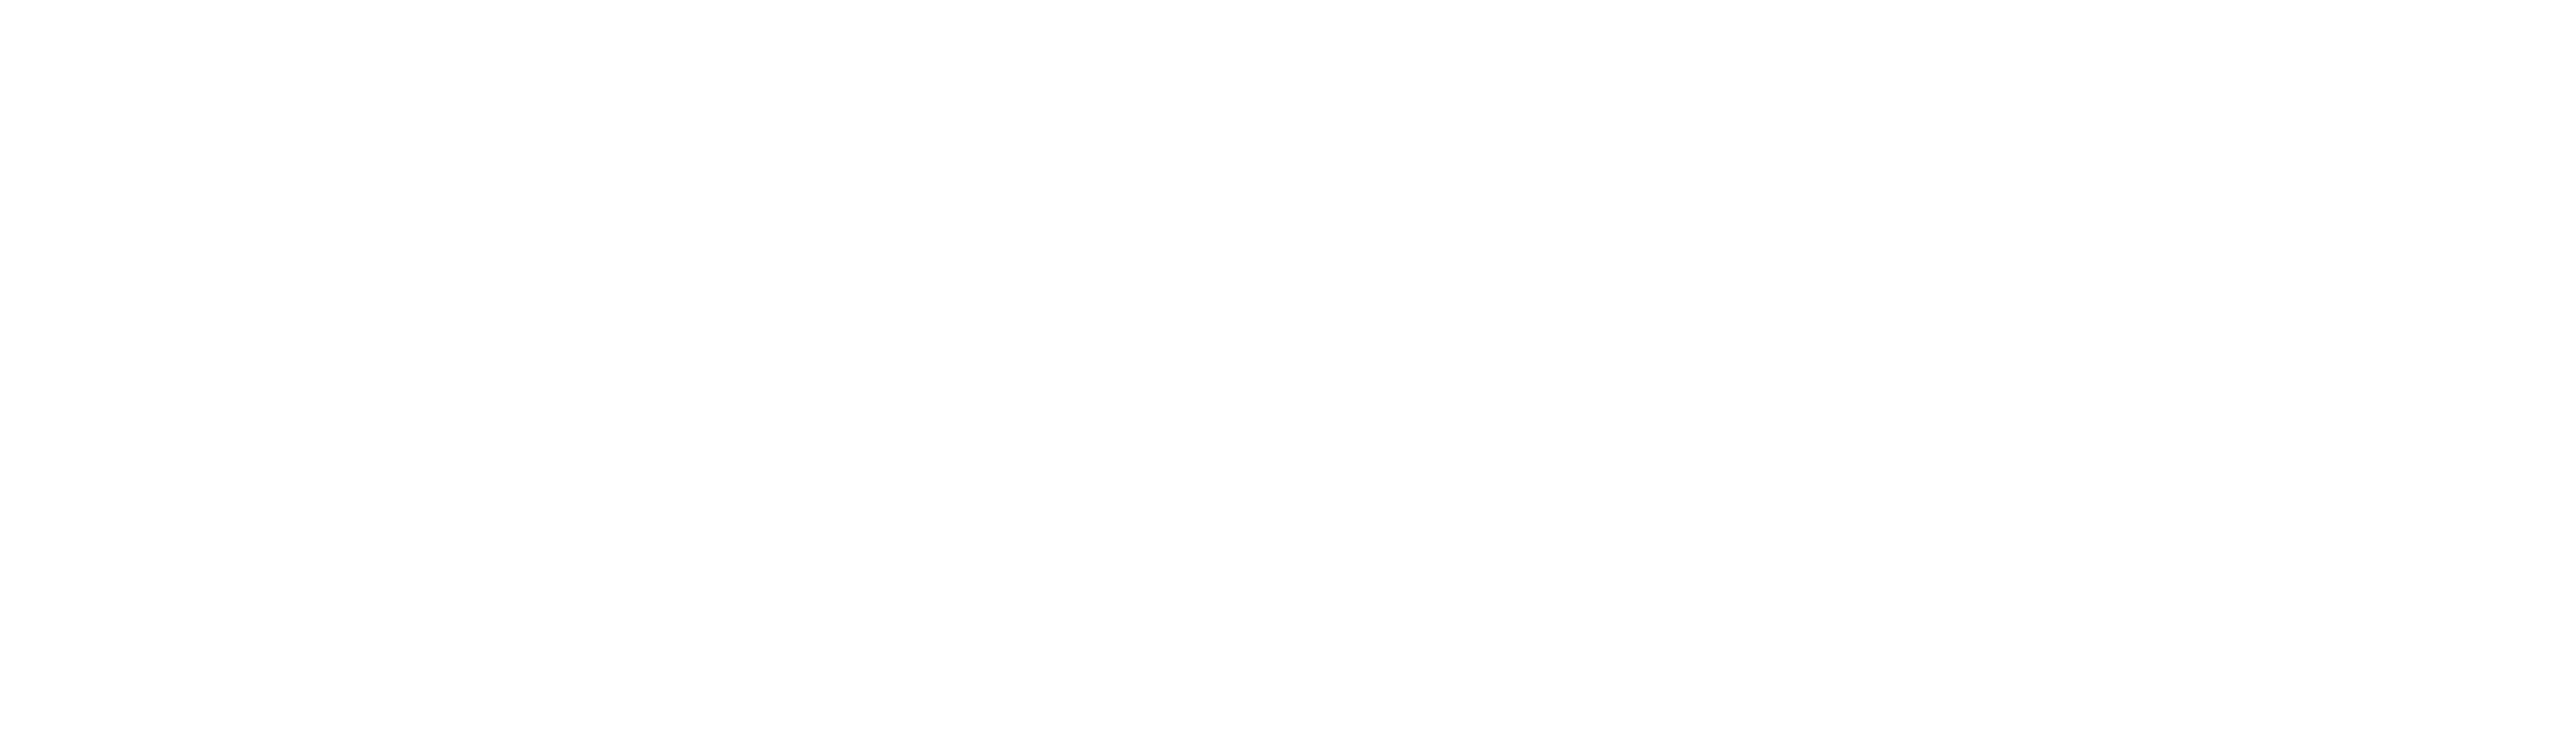 Cyprus Credit Union 